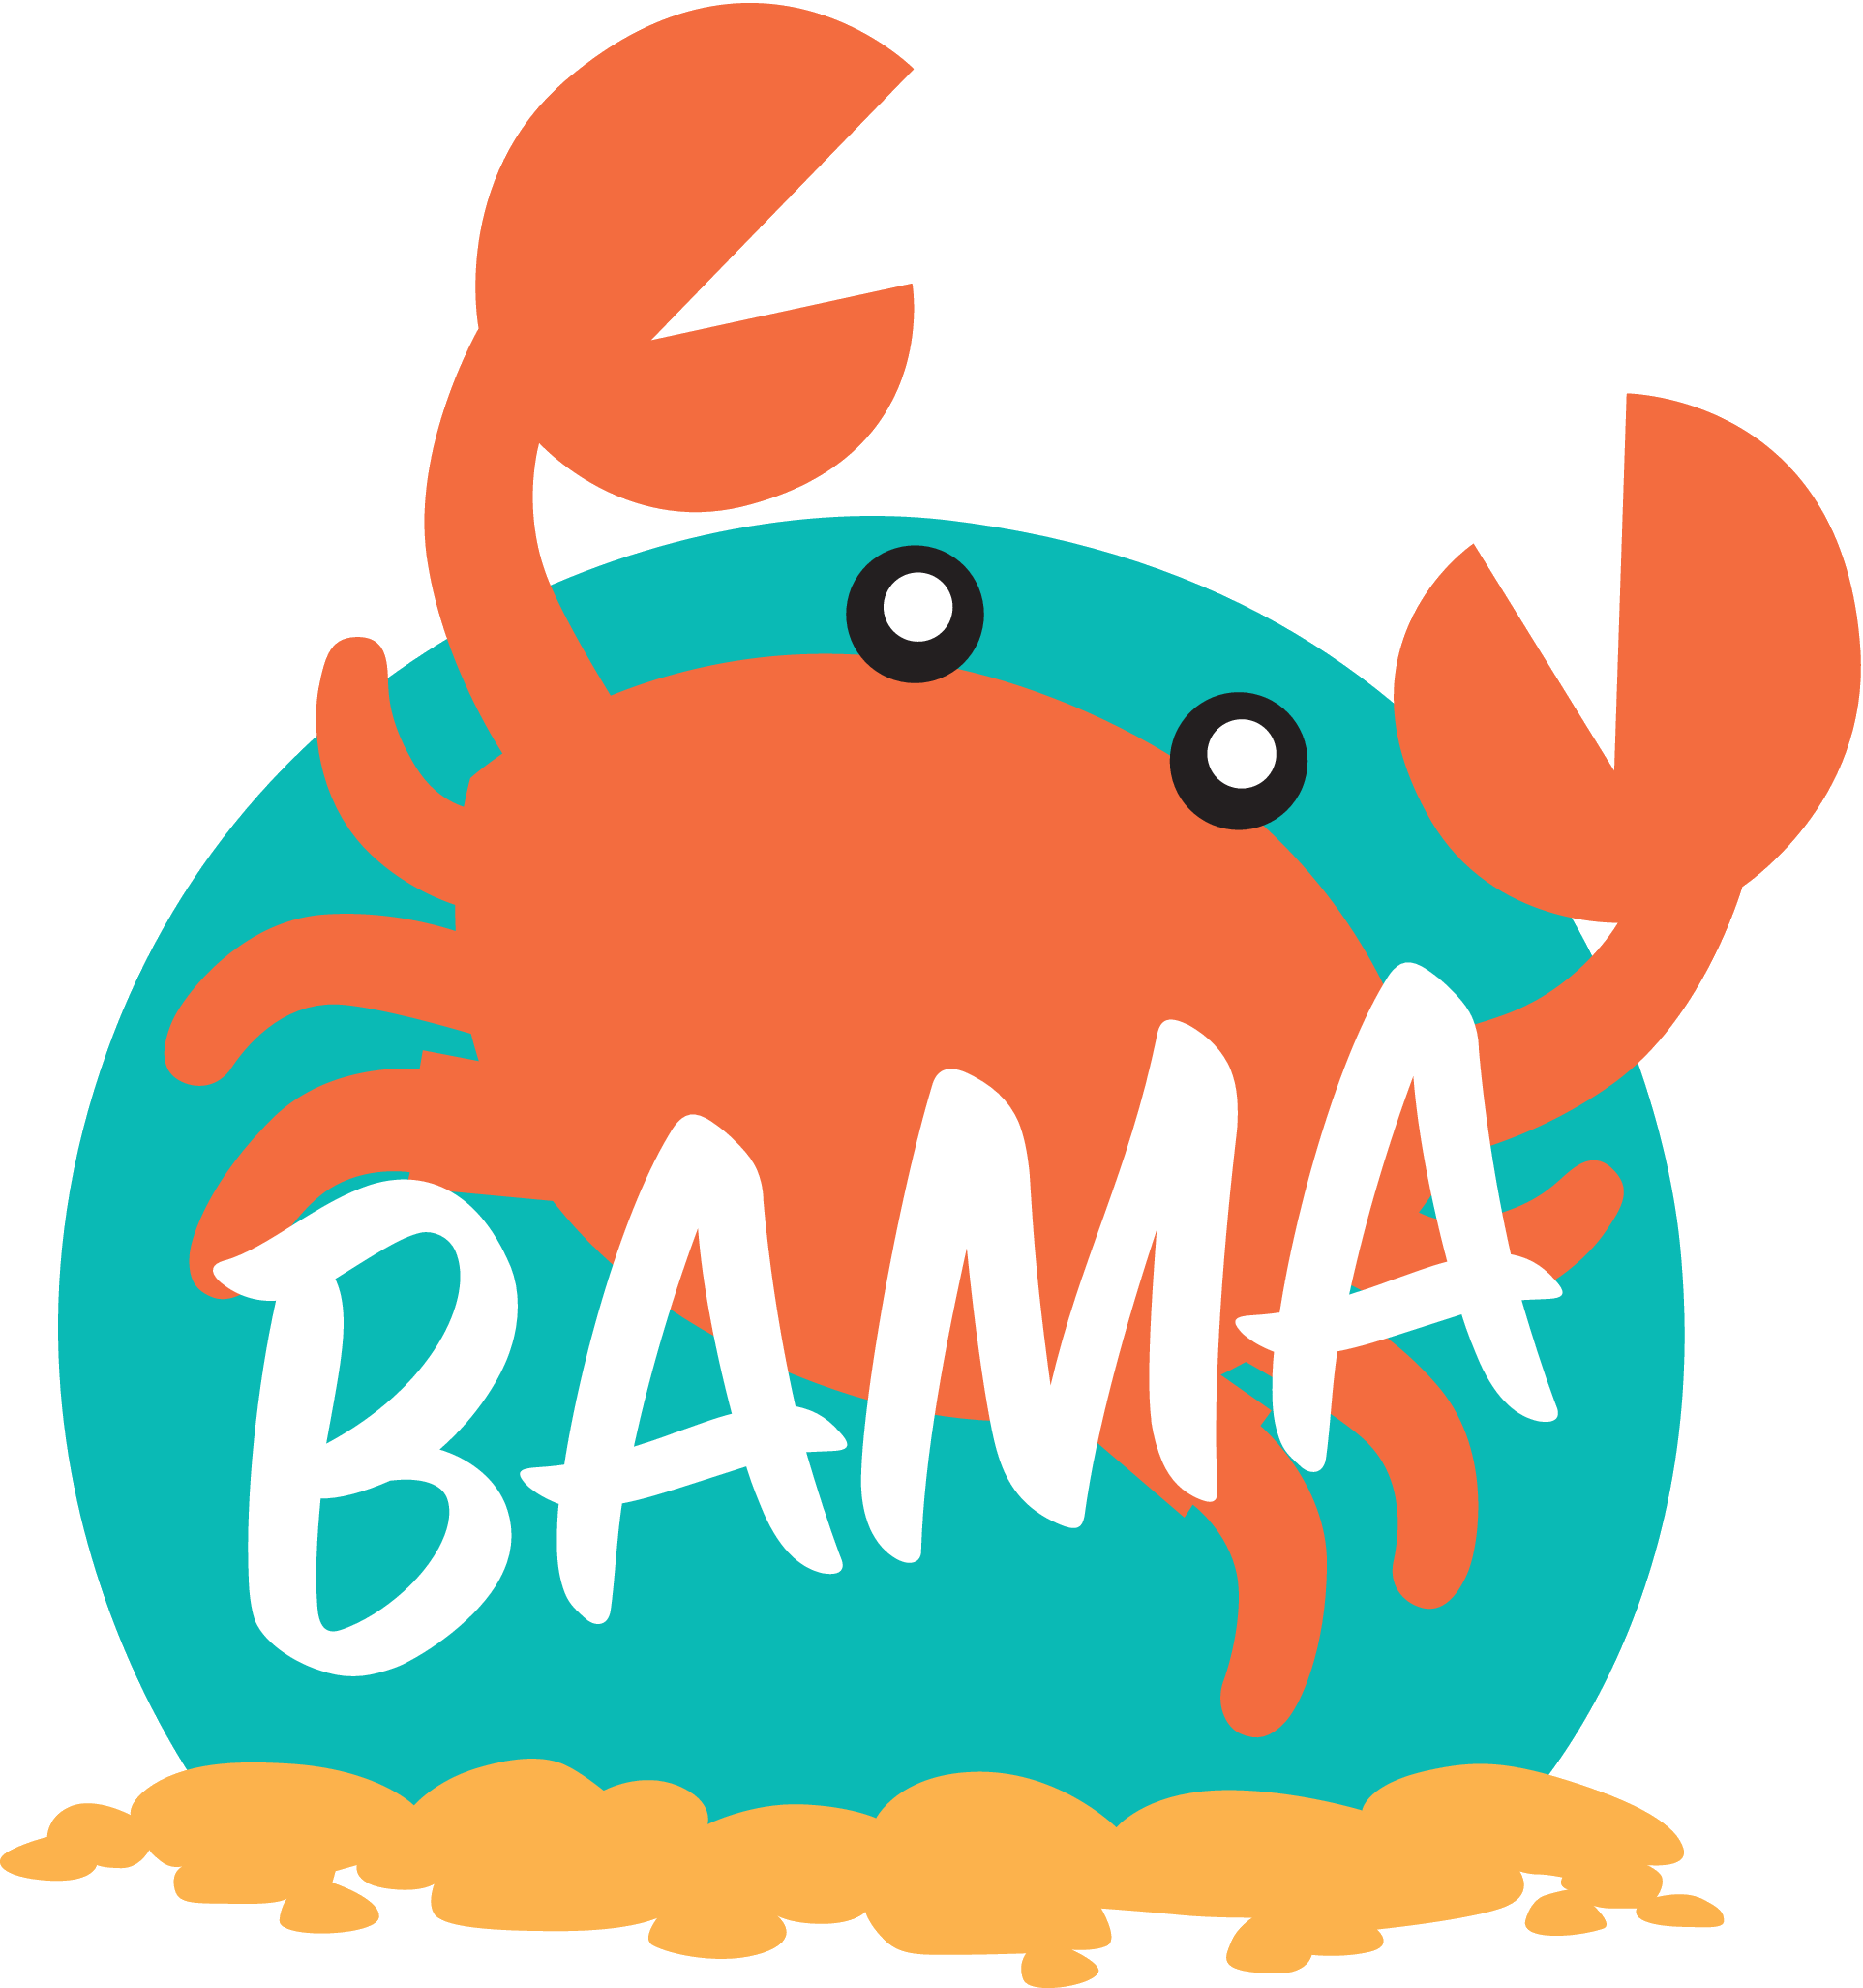 BAMA Business Membership